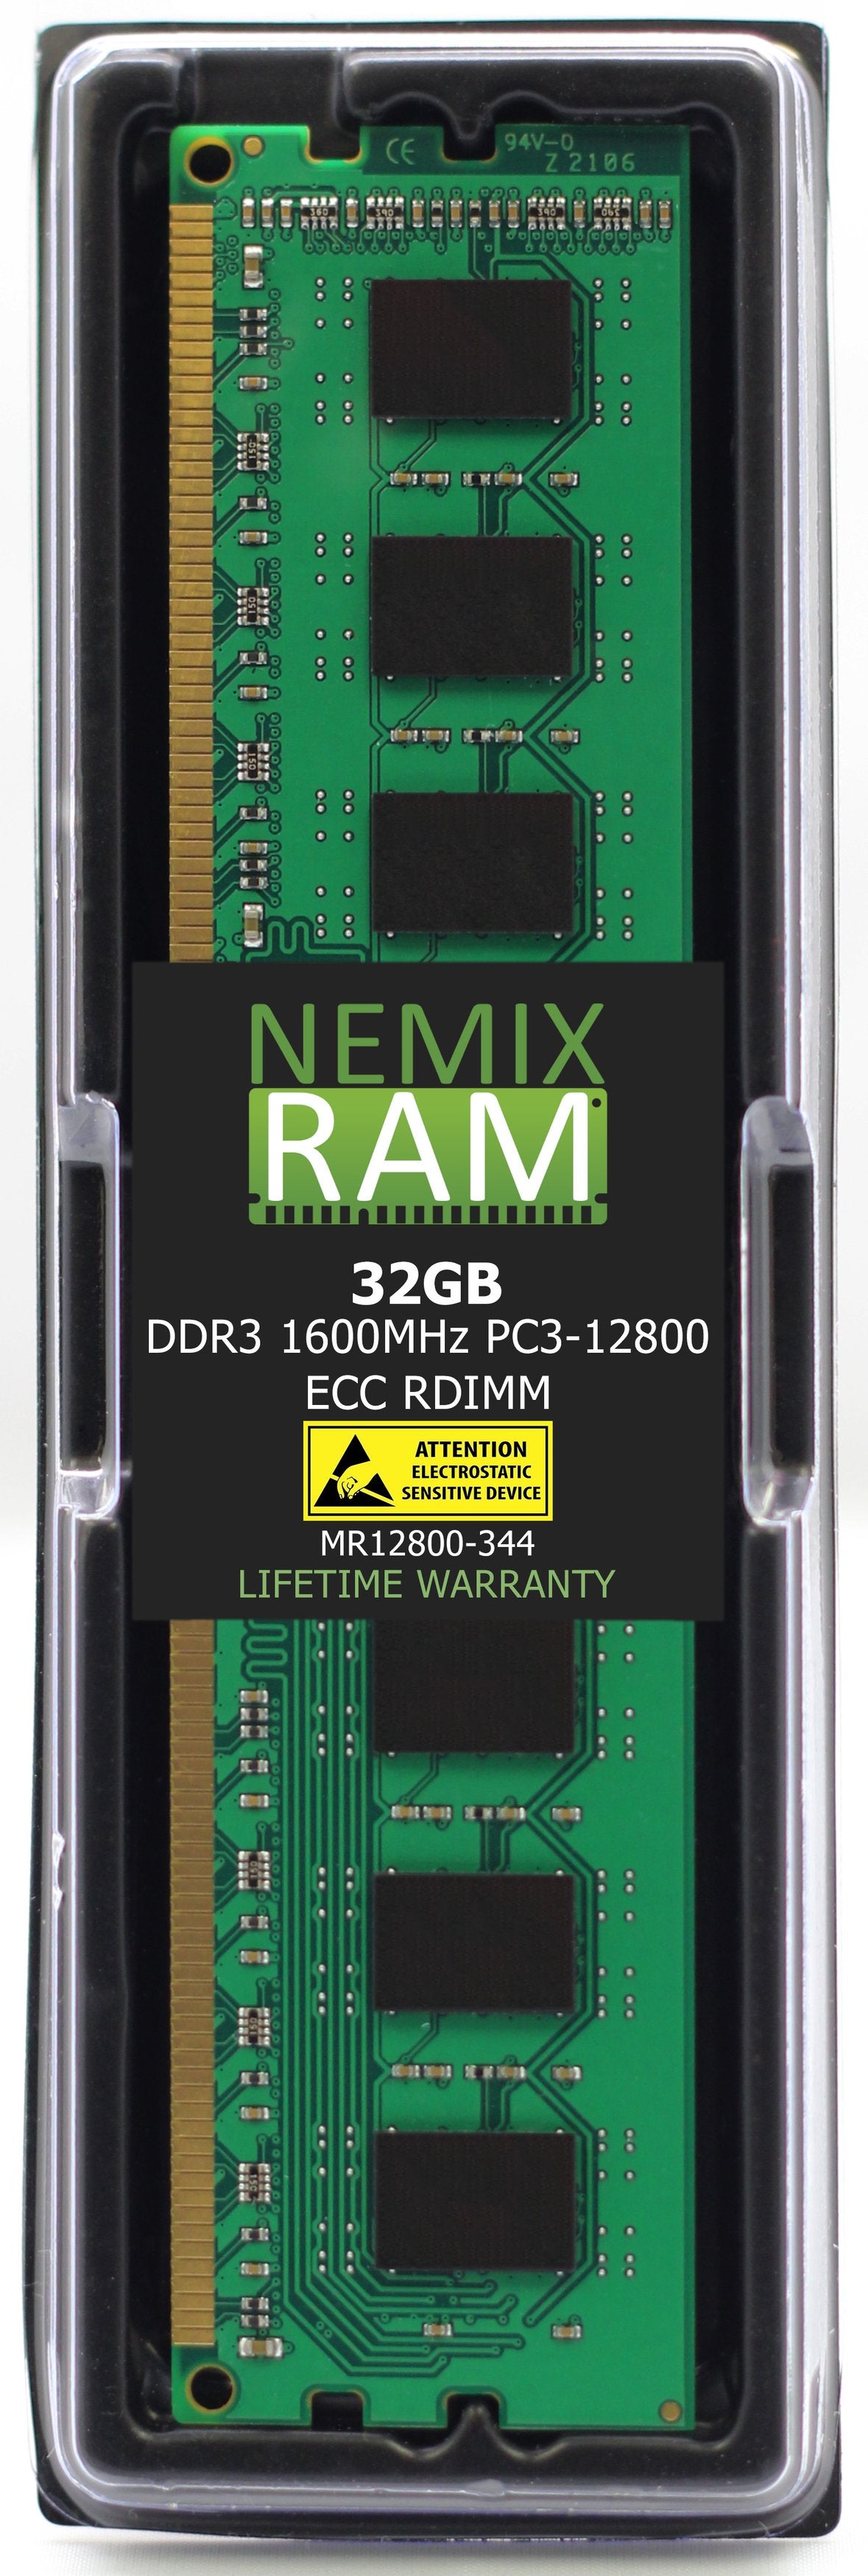 Hynix HMT84GR7DMR4C-PB 32GB DDR3 1600MHZ PC3-12800 RDIMM Compatible Memory Module